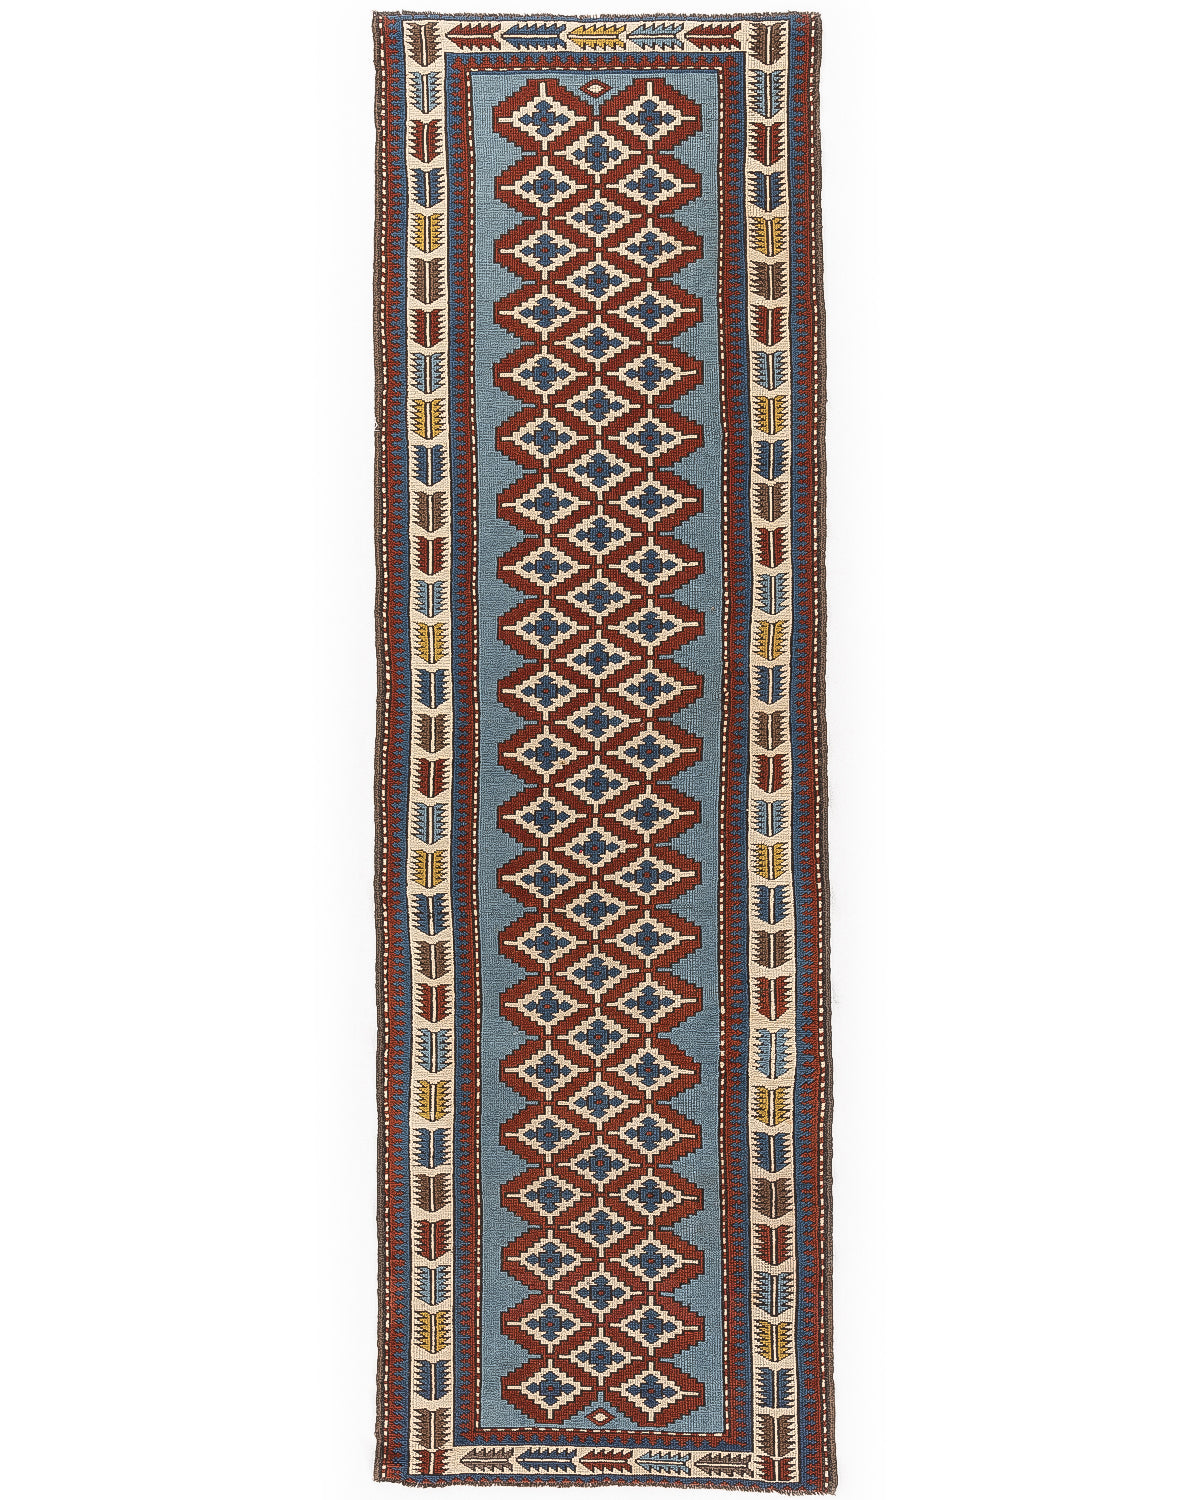 Oriental Turkish Runner Rug Handmade Wool On Wool Kars 103 X 334 Cm - 3' 5'' X 11'